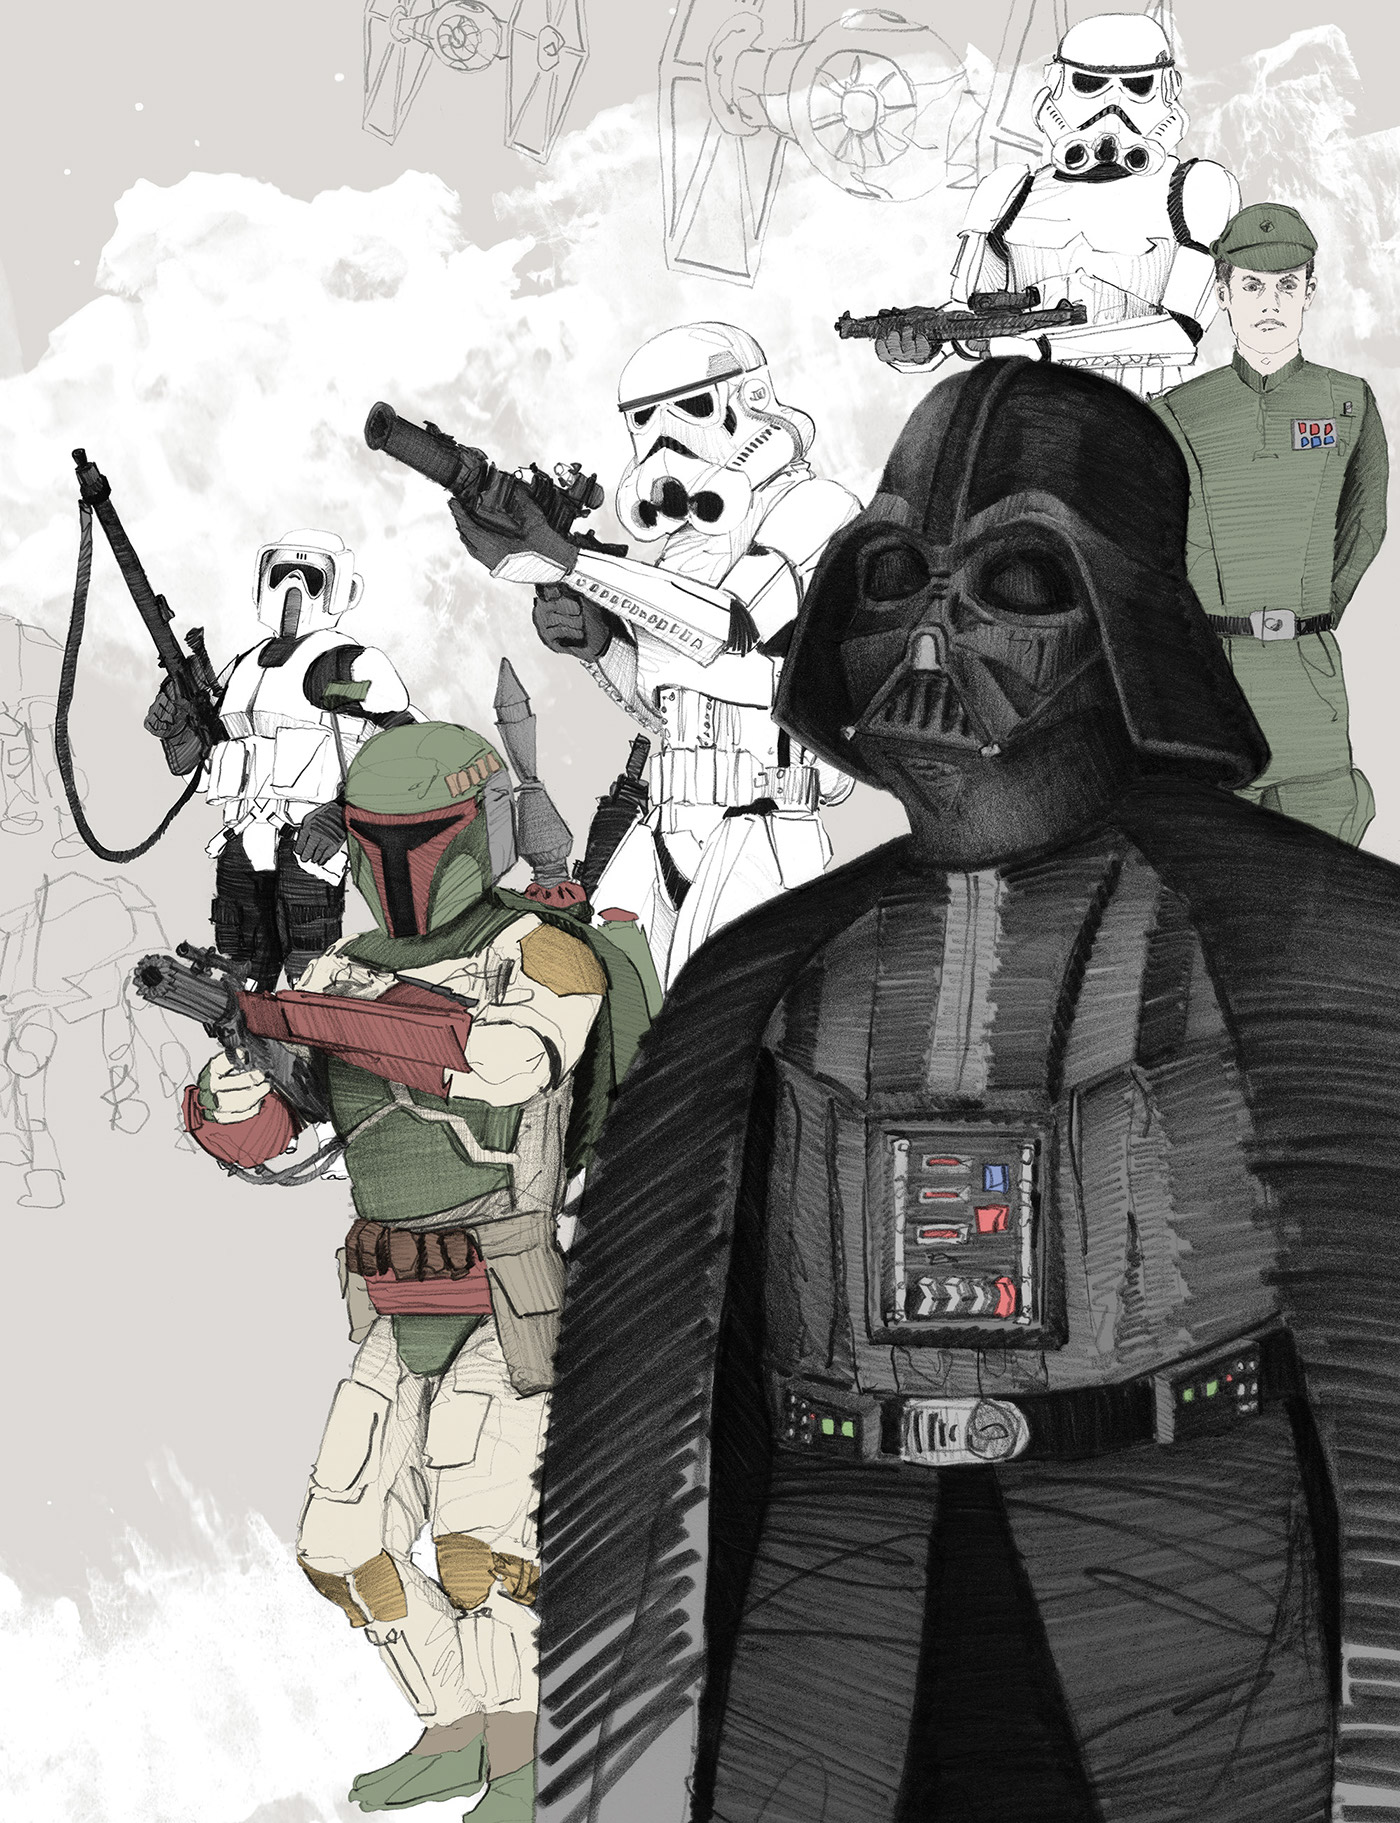 star wars Starwars drawings editorial The Force Awakens darth vader luke skywalker stormtroopers ROLLING STONE MAGAZINE C3PO R2D2 Chewbacca